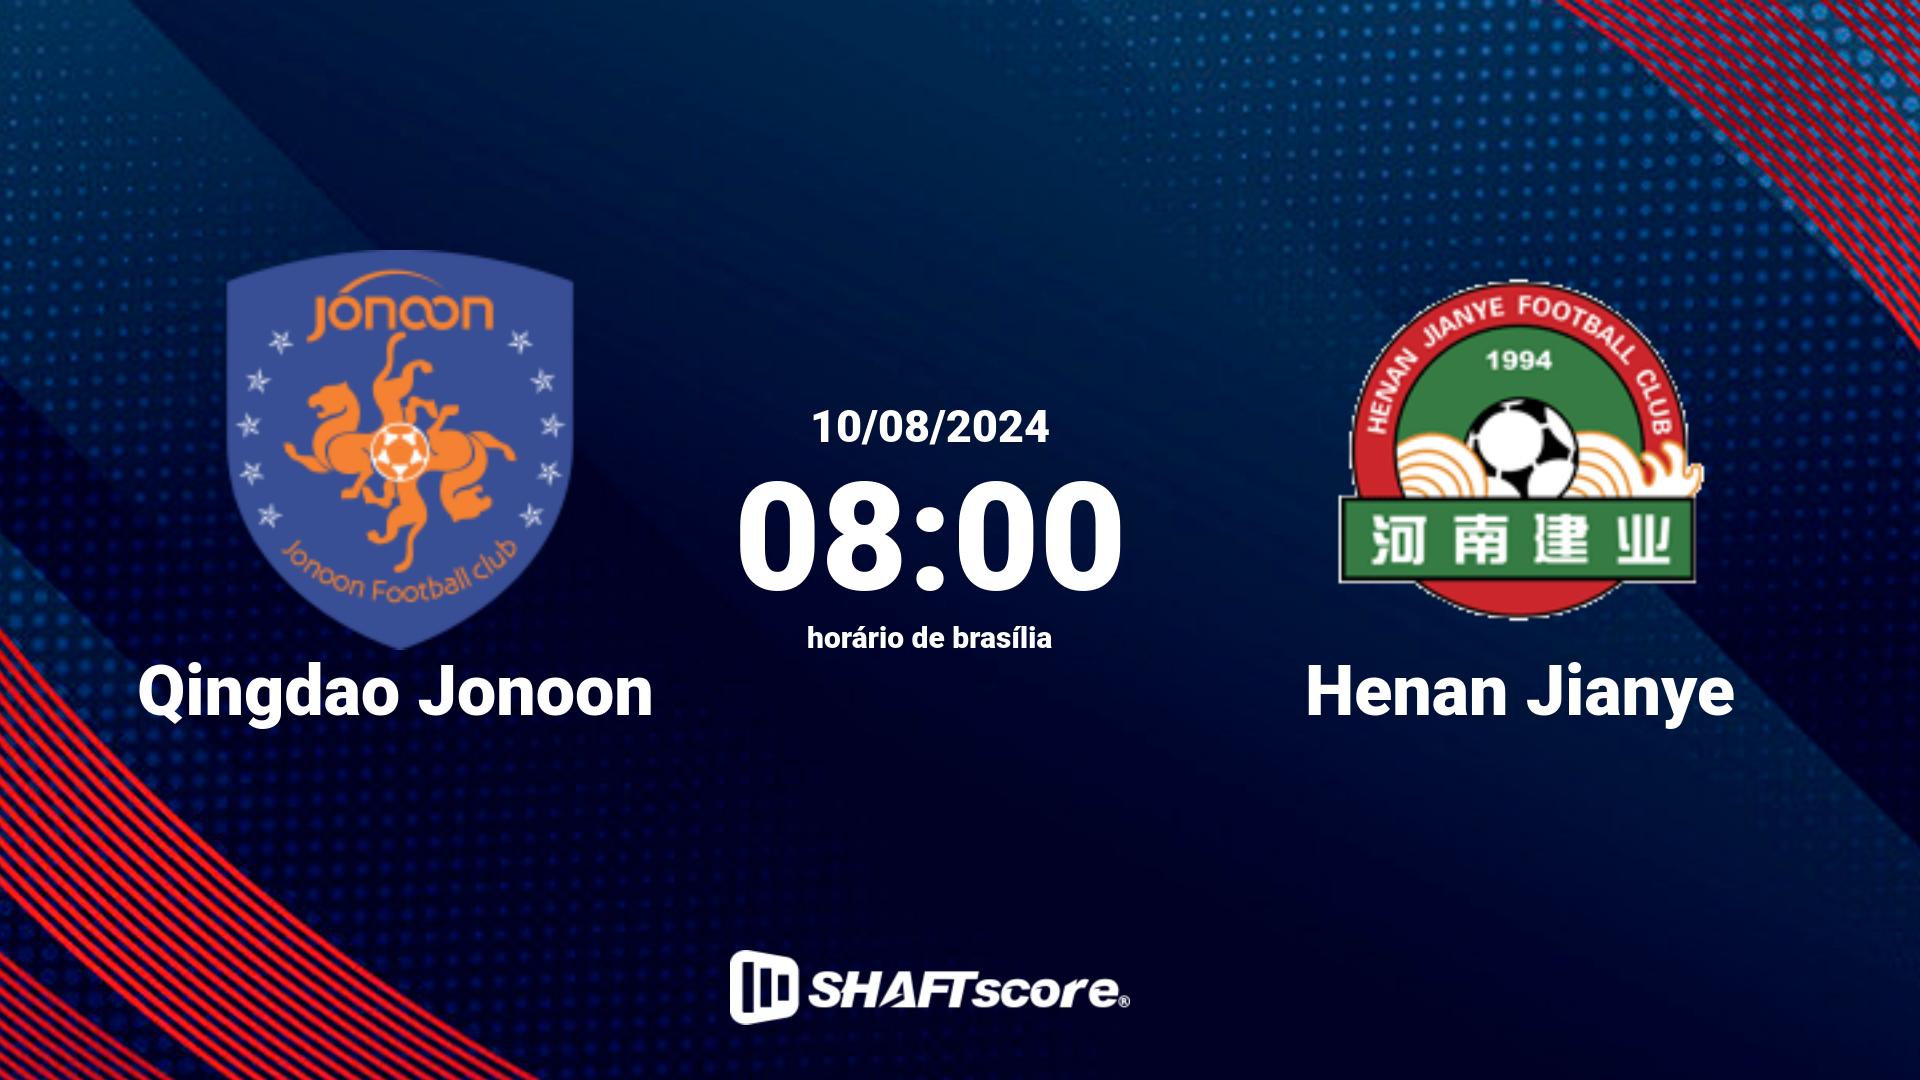 Estatísticas do jogo Qingdao Jonoon vs Henan Jianye 10.08 08:00